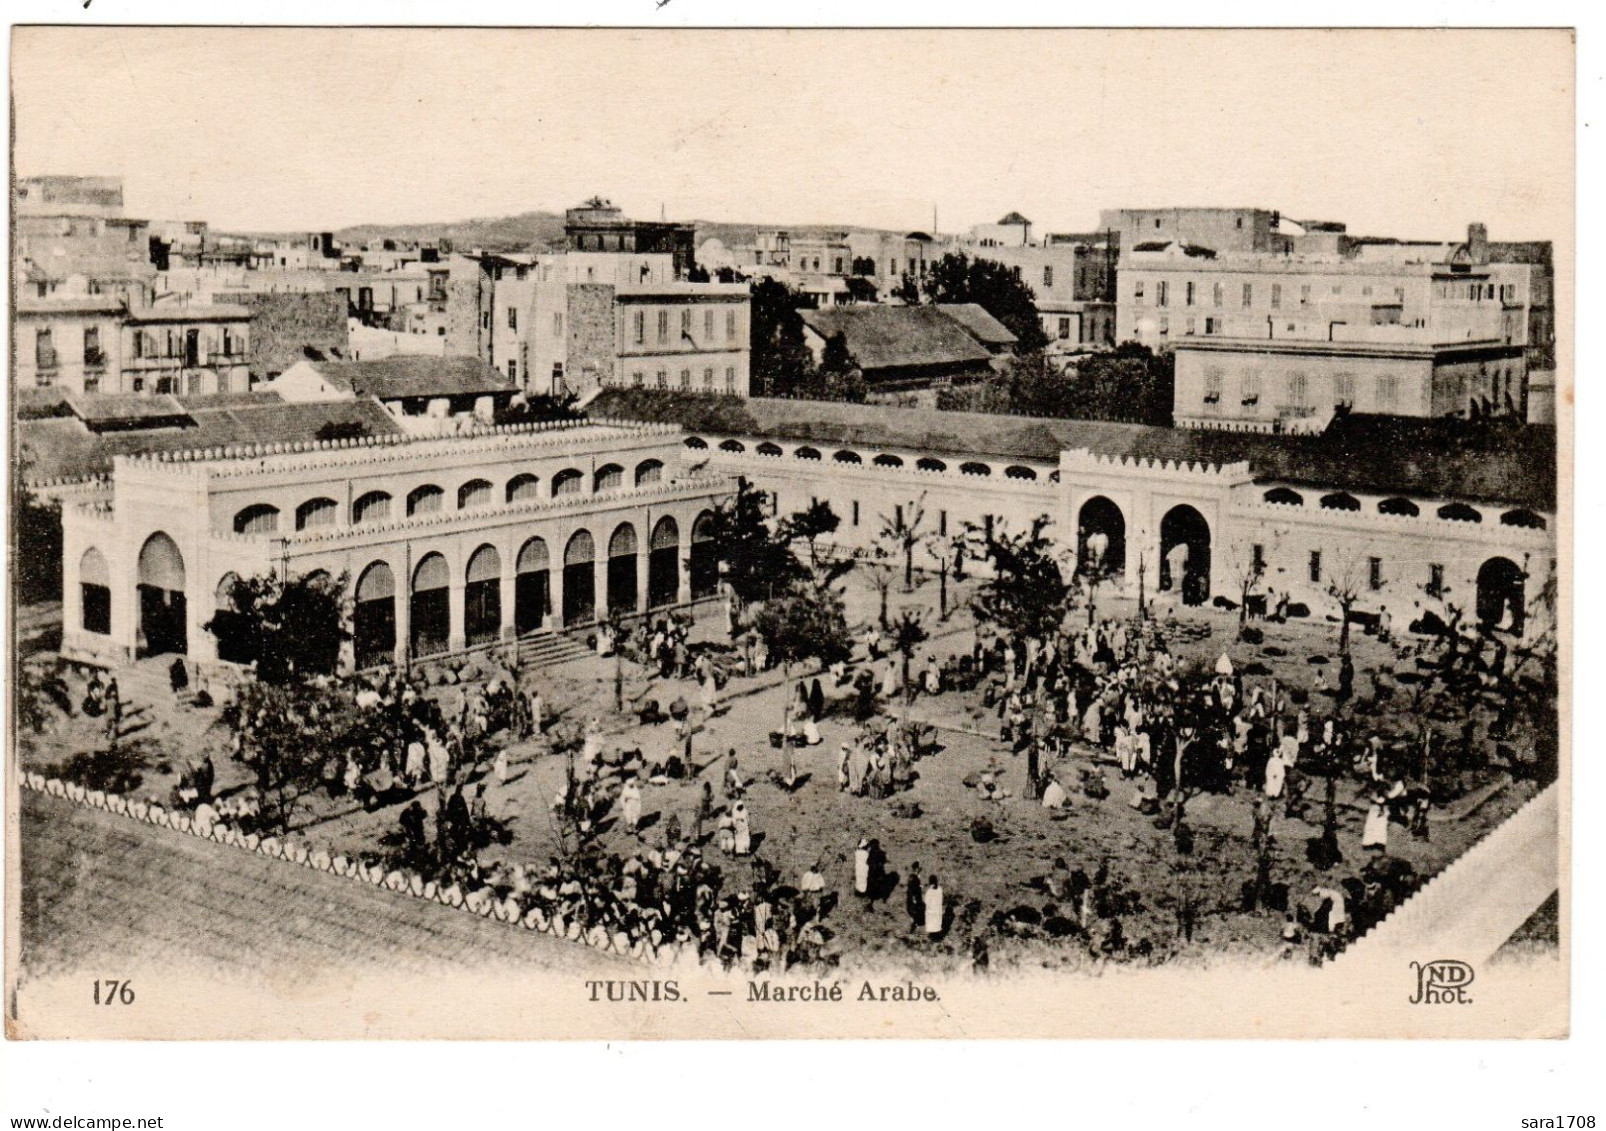 TUNIS, Marché Arabe. 2 SCAN. - Tunisia